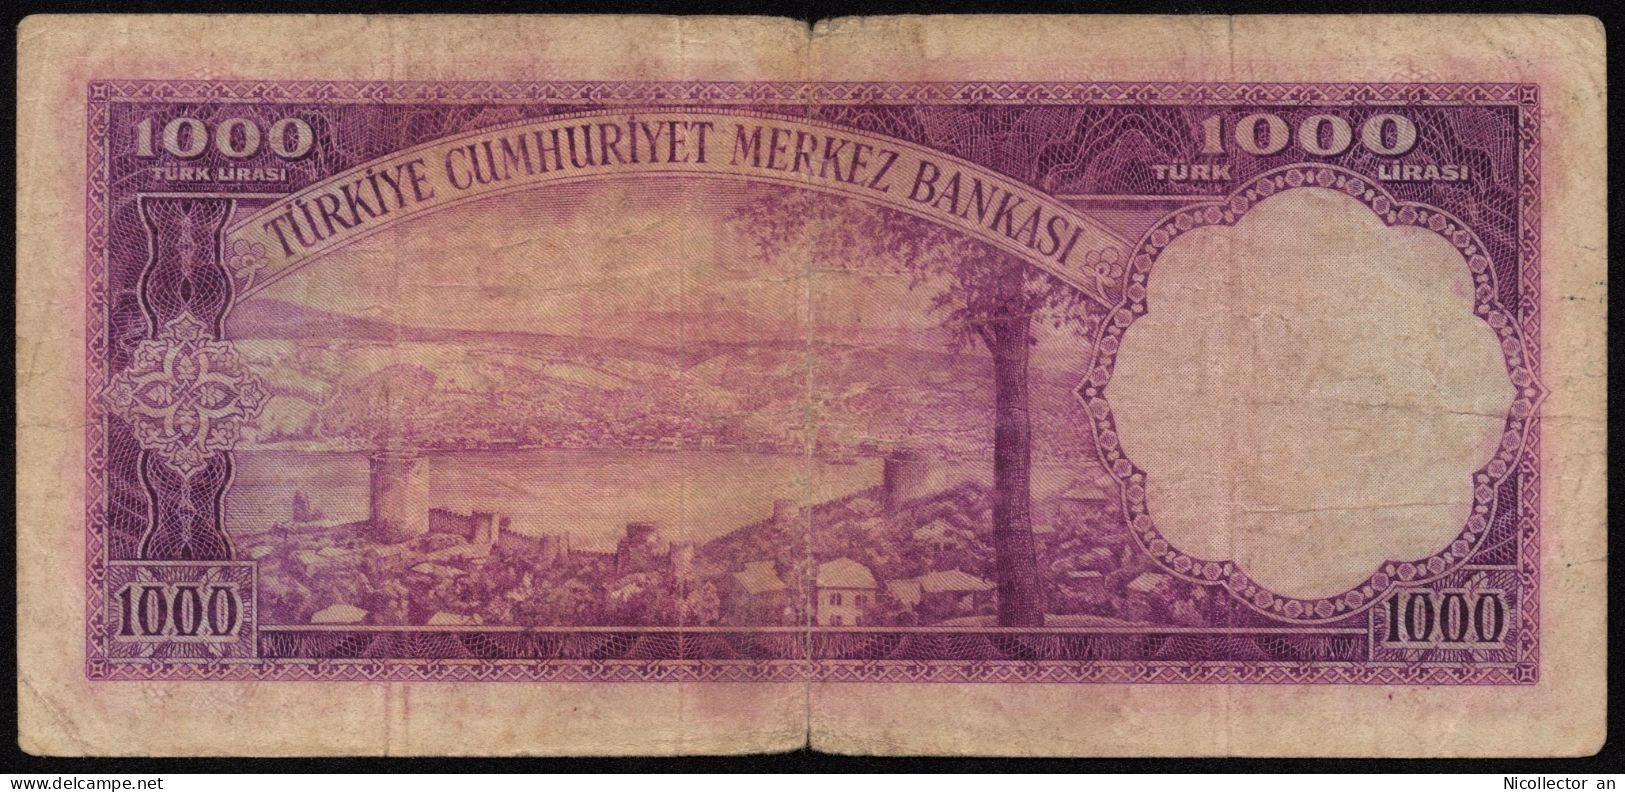 Turkey, 1.000 Lira, 1953, P-172, FINE Rare Banknote - Turkey